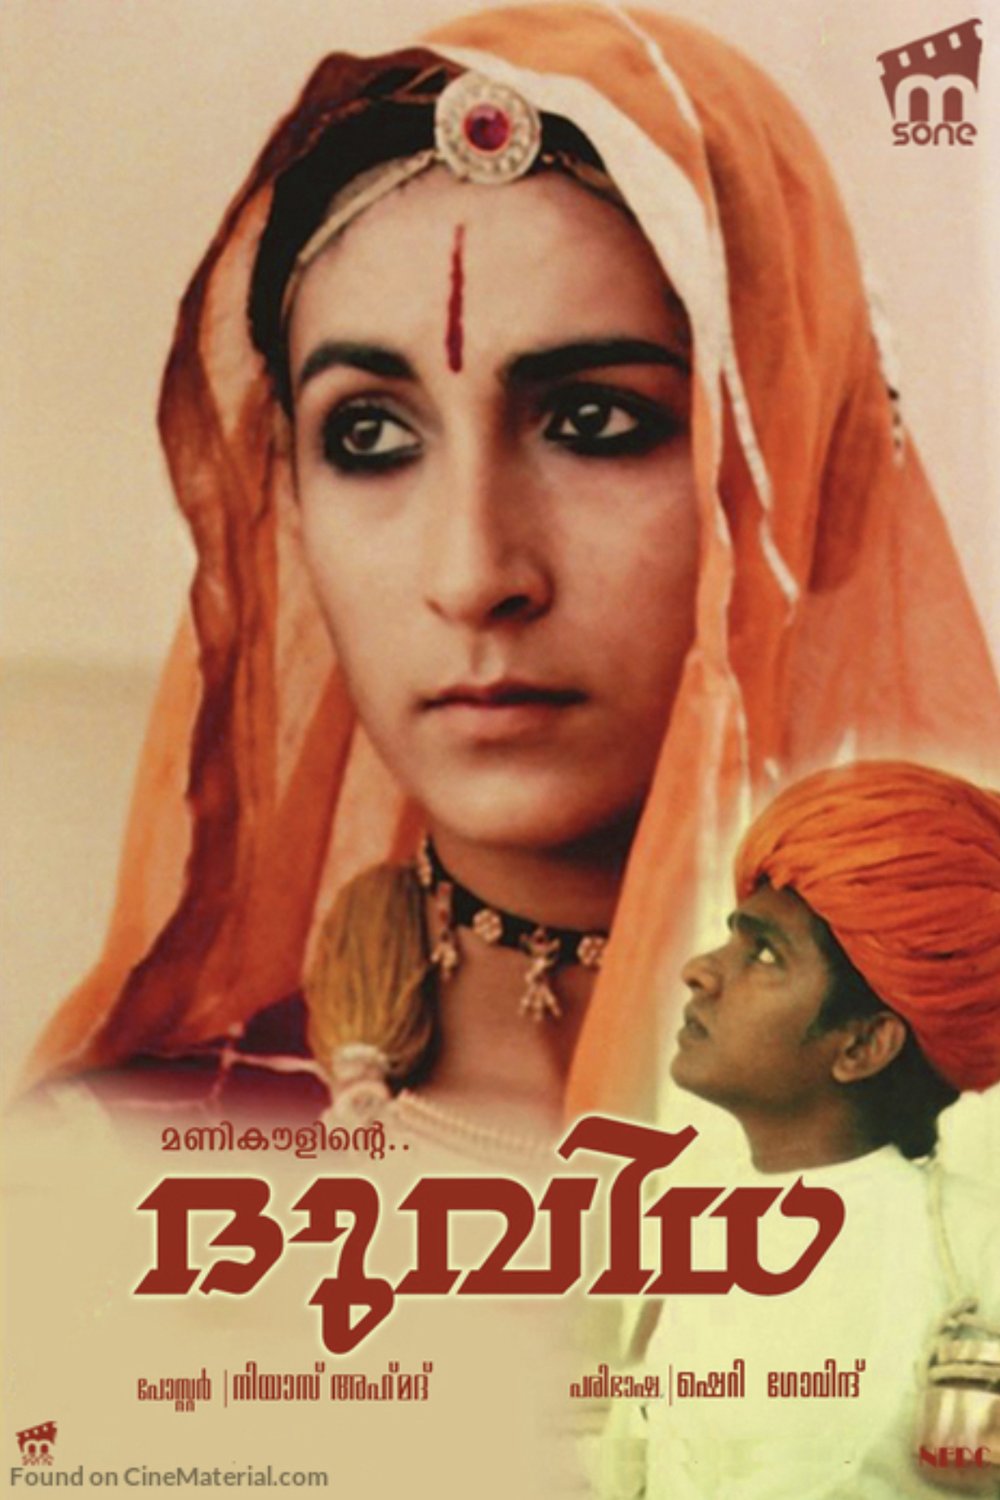 Hindi poster of the movie Duvidha